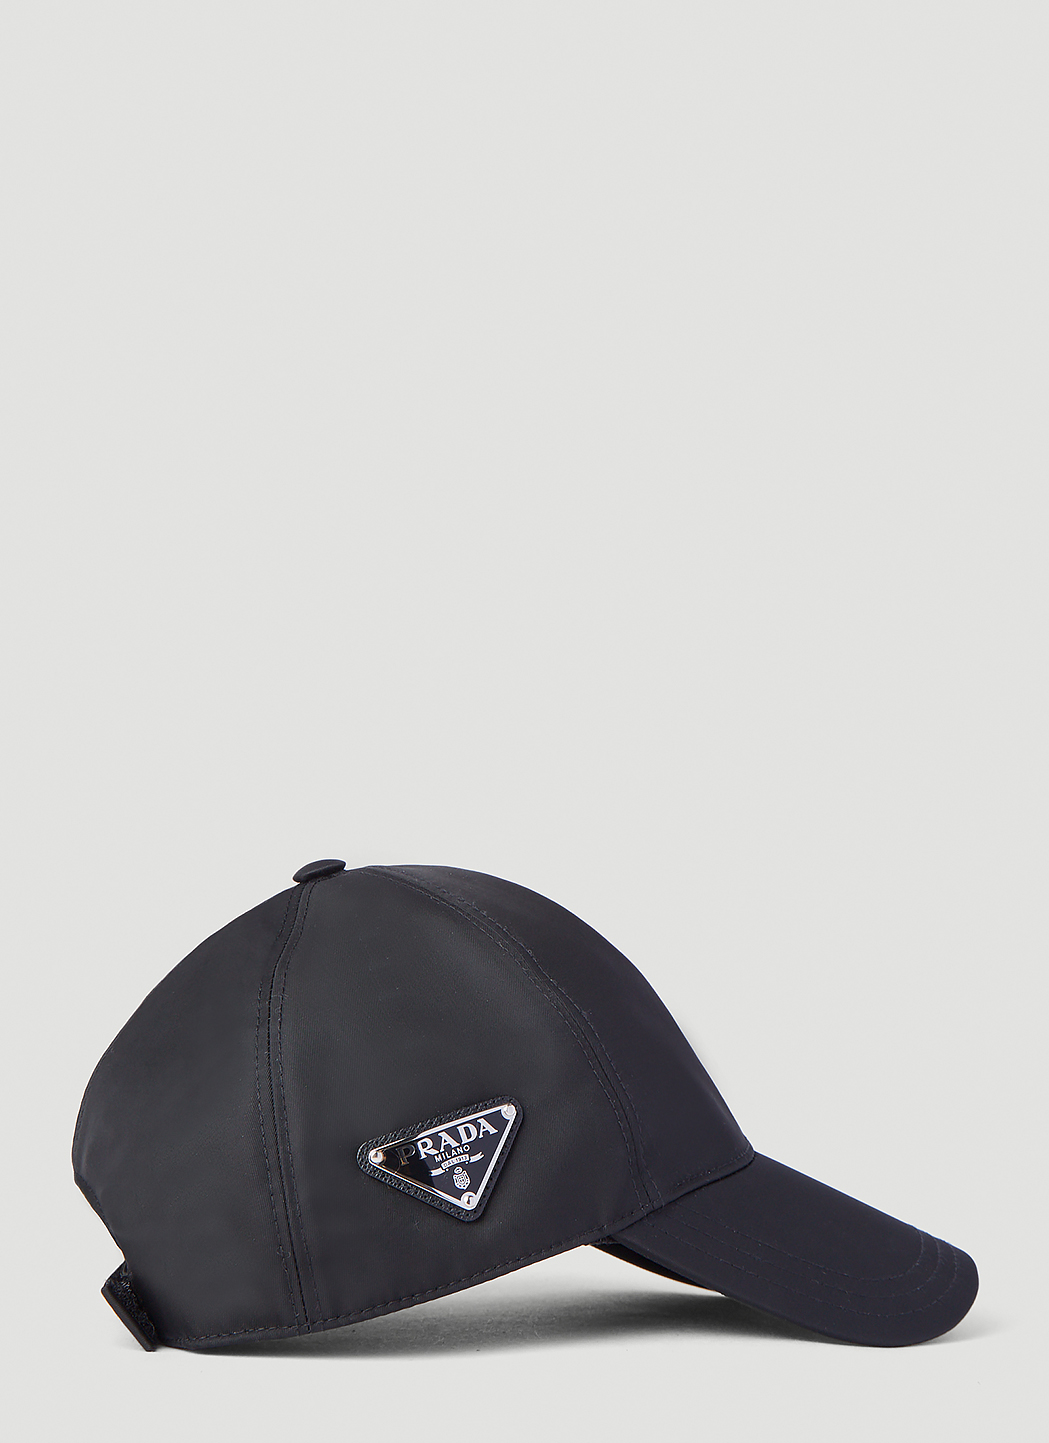 Prada Women's Re-Nylon Baseball Cap in Black | LN-CC